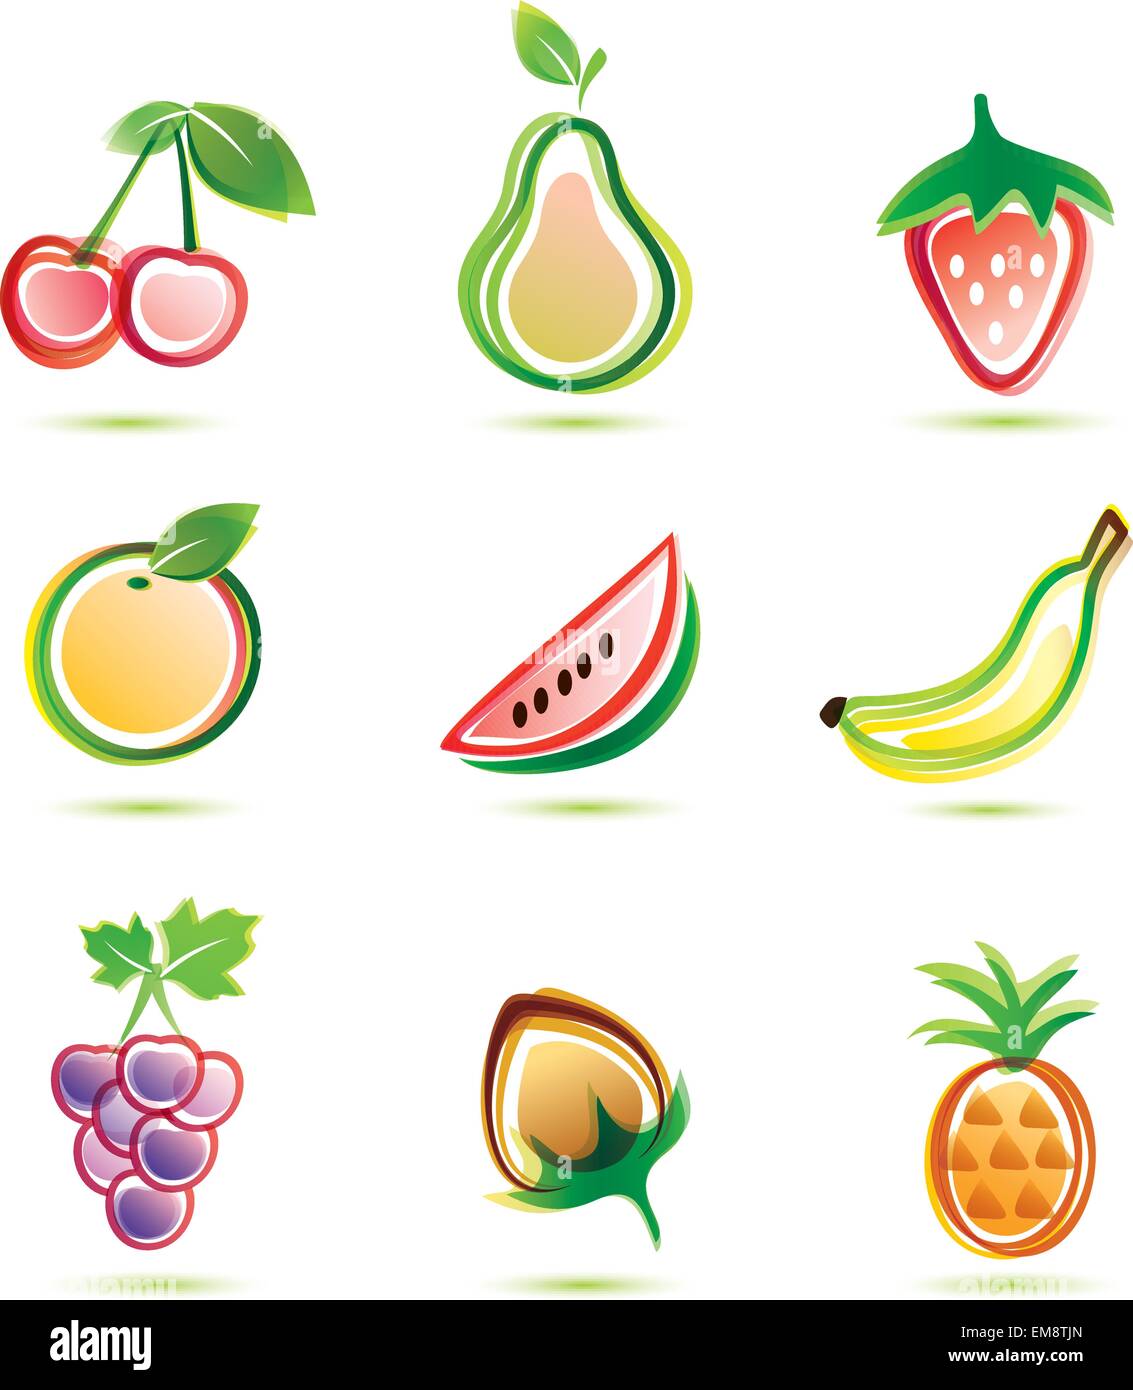 green fruits icons set, organic food concept Stock Vector